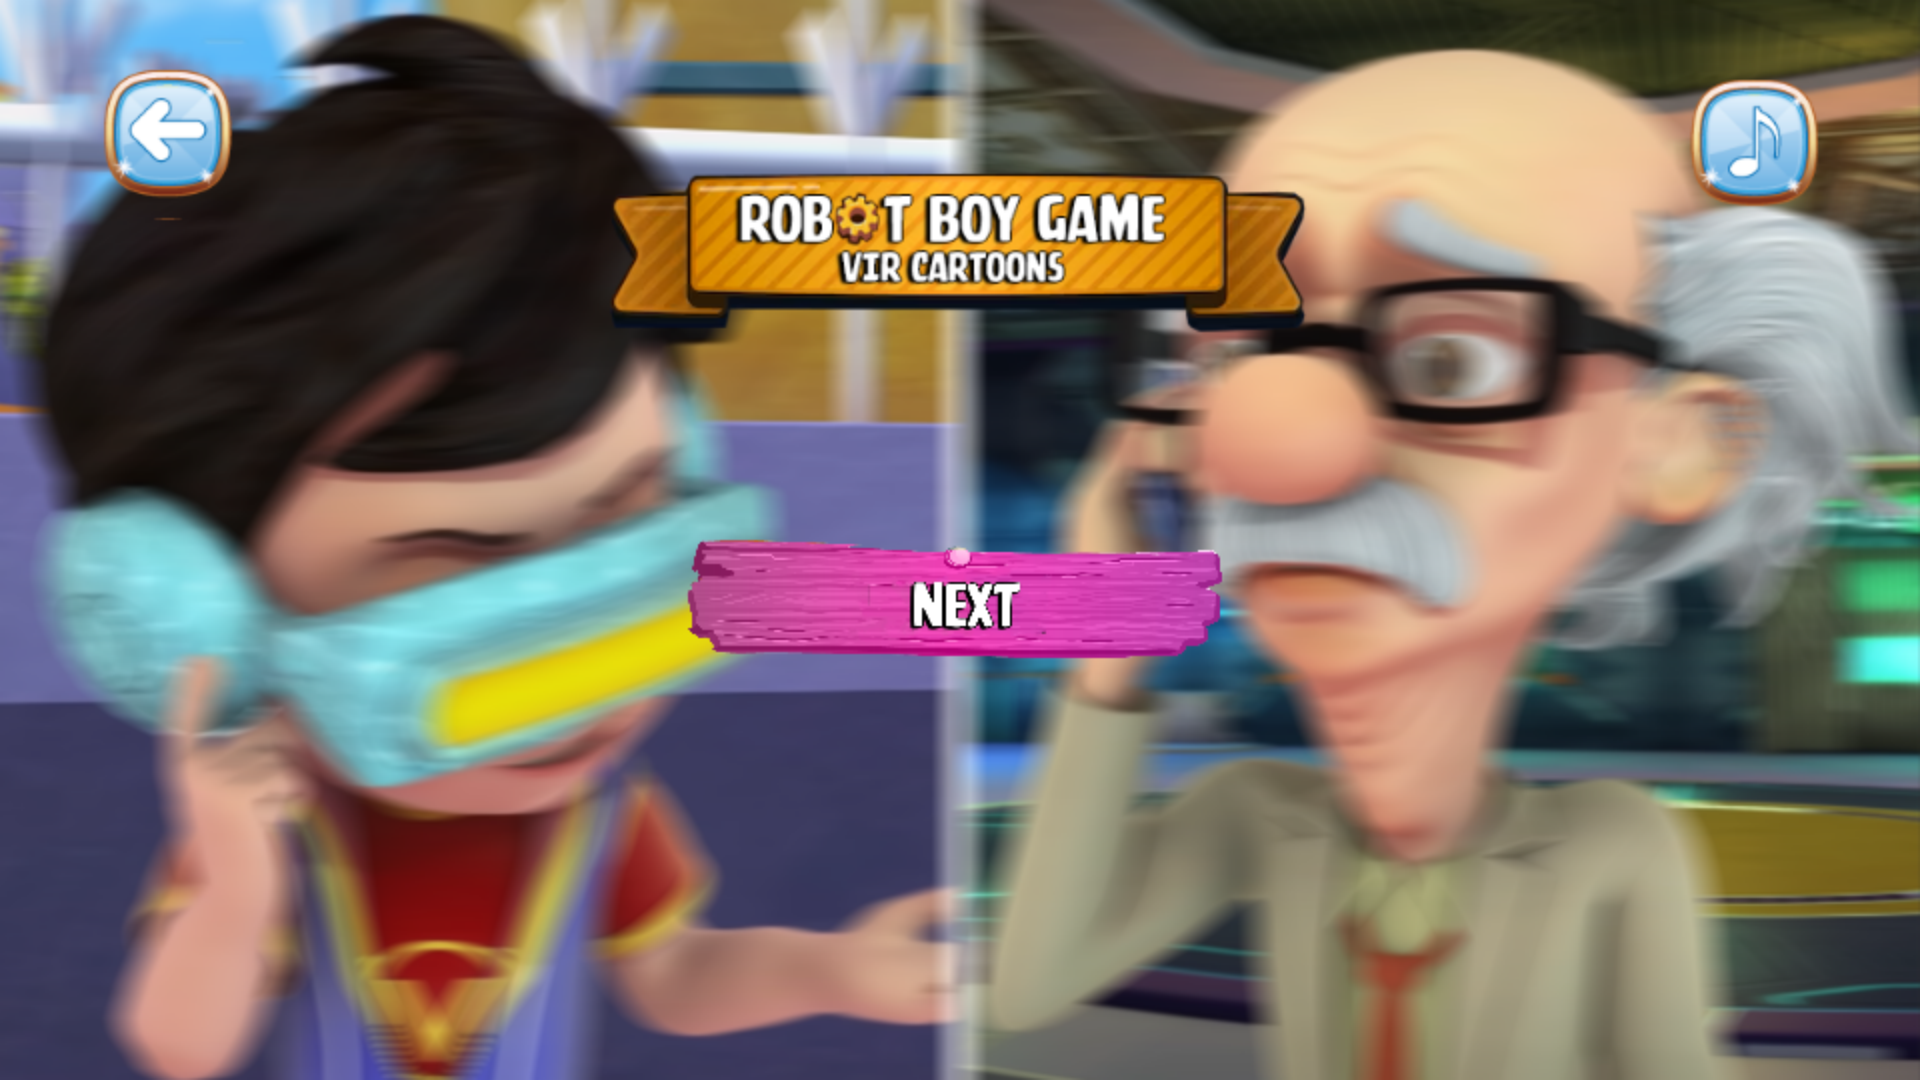 Robotboy - Robotboy vs Robot Evil, Season 1